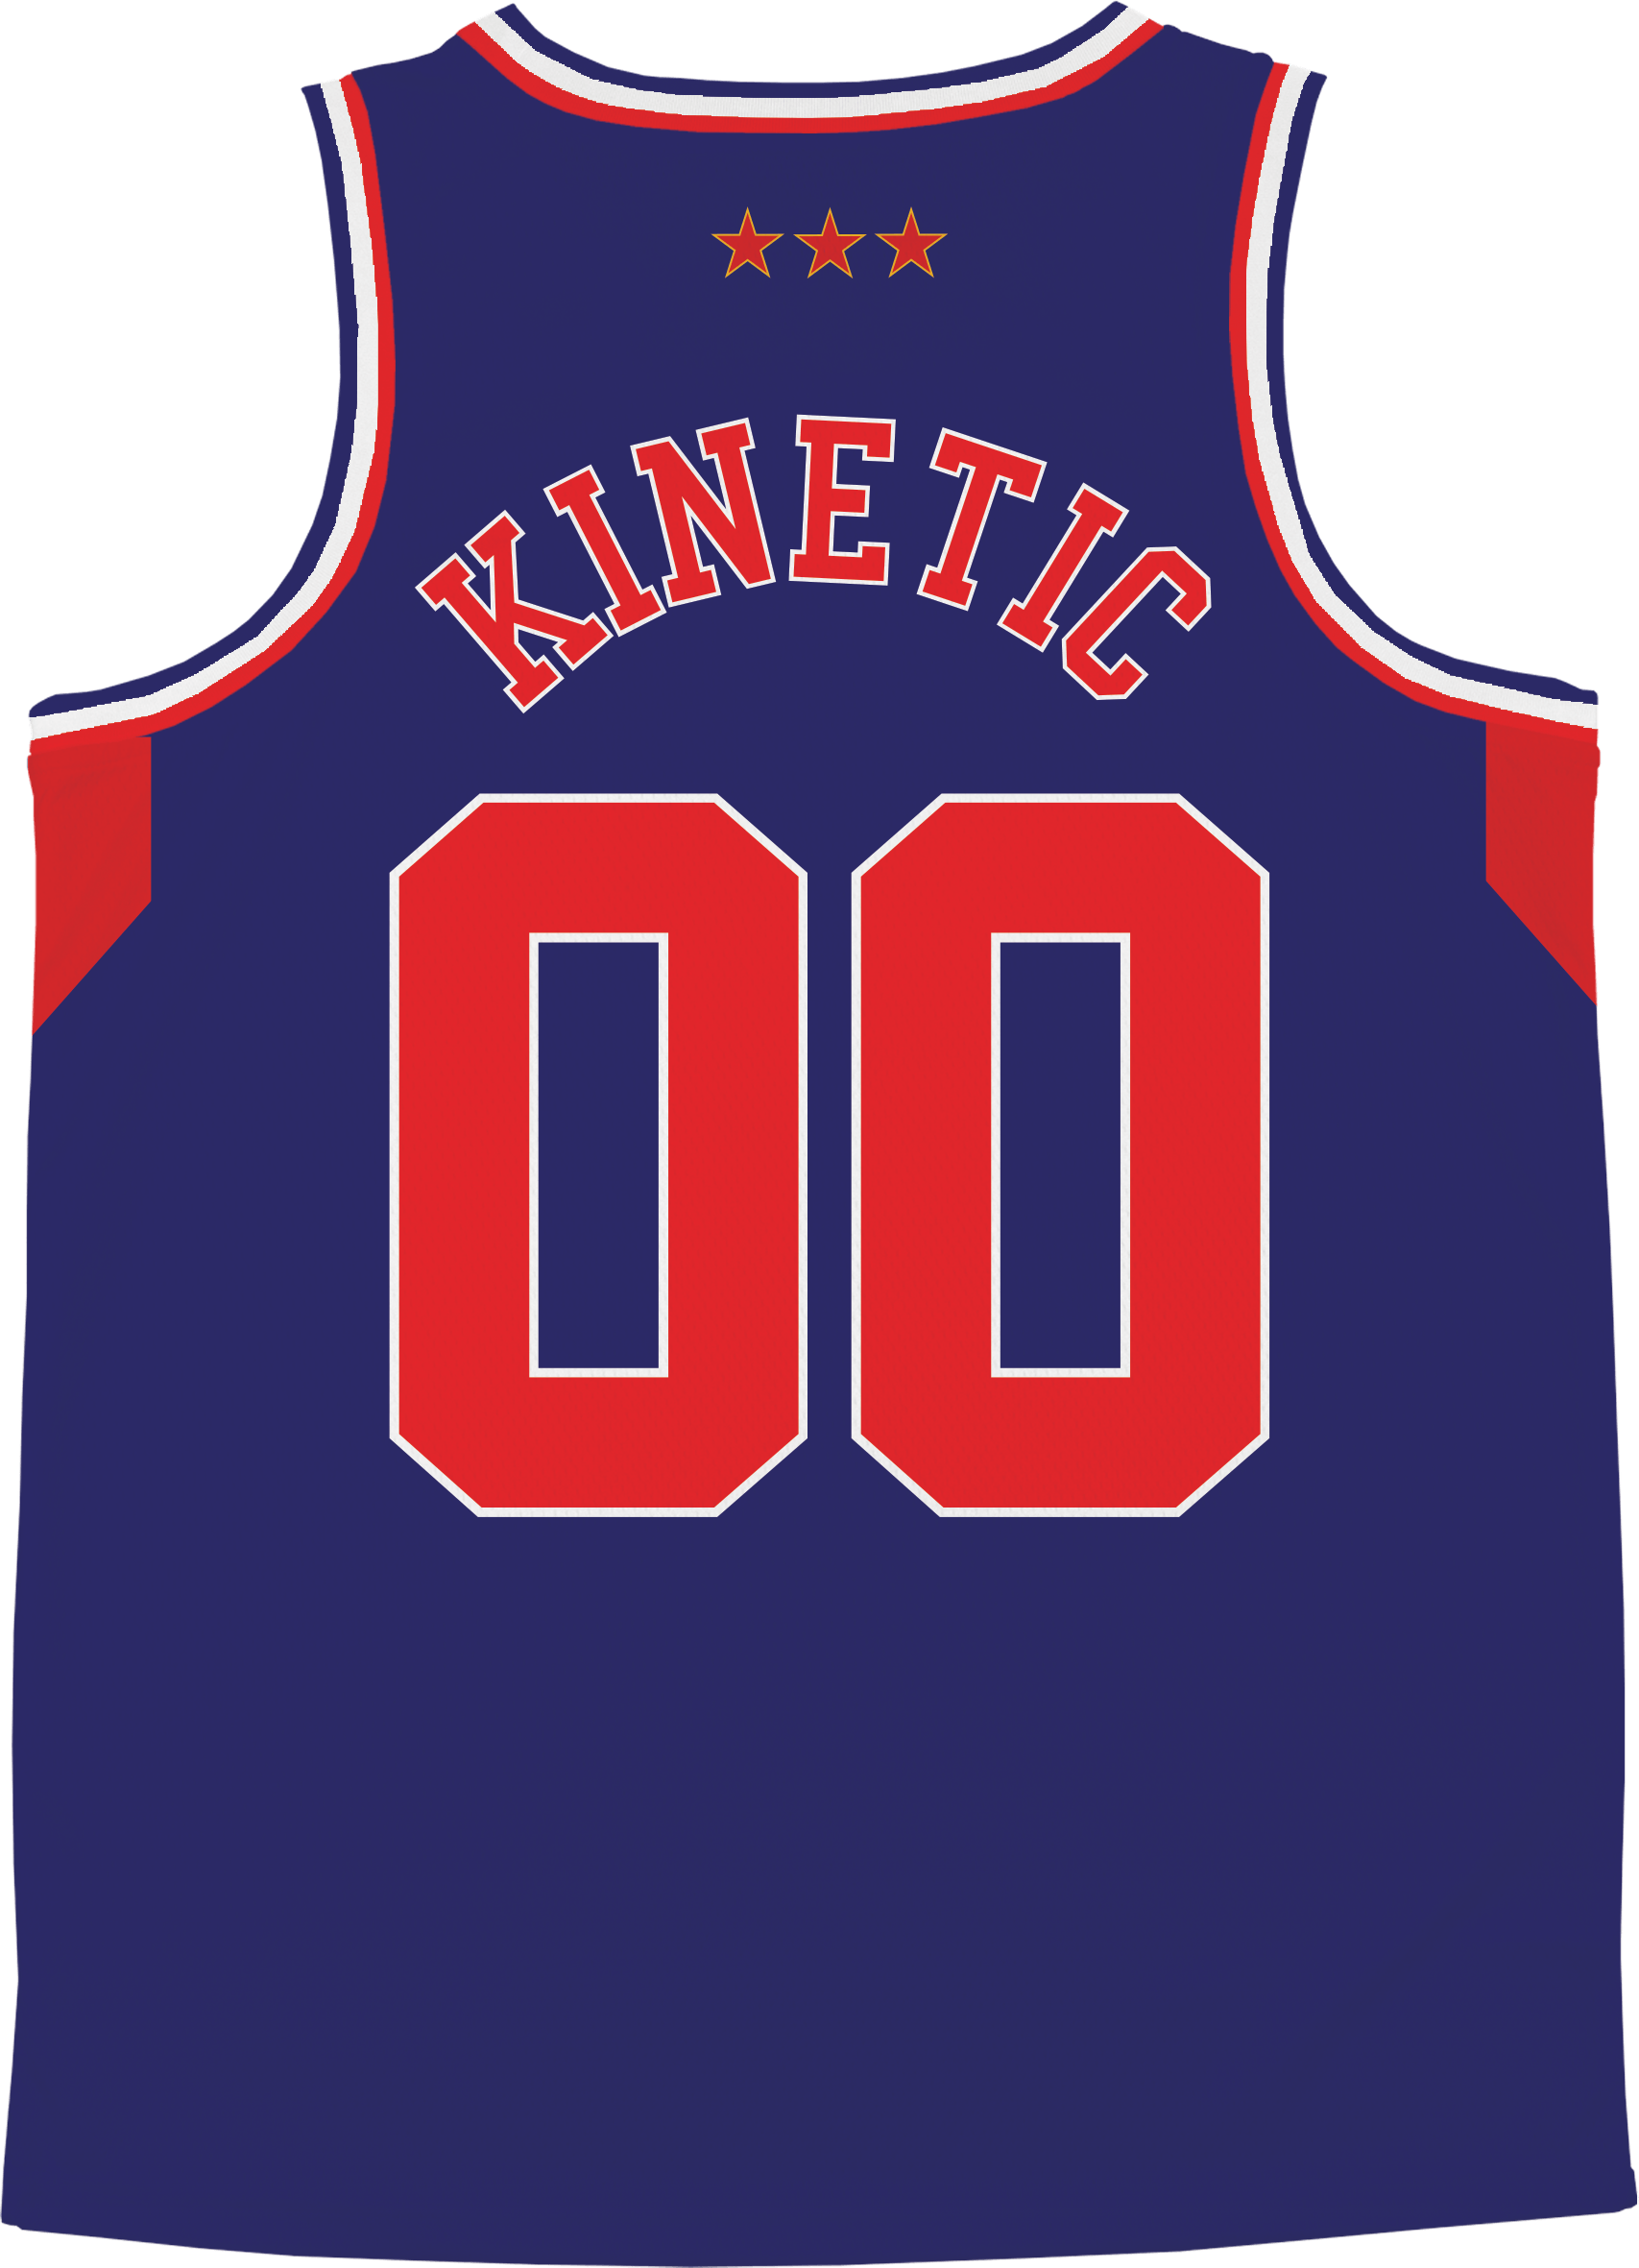 Kappa Alpha Order - Retro Ballers Basketball Jersey – Kinetic Society LLC